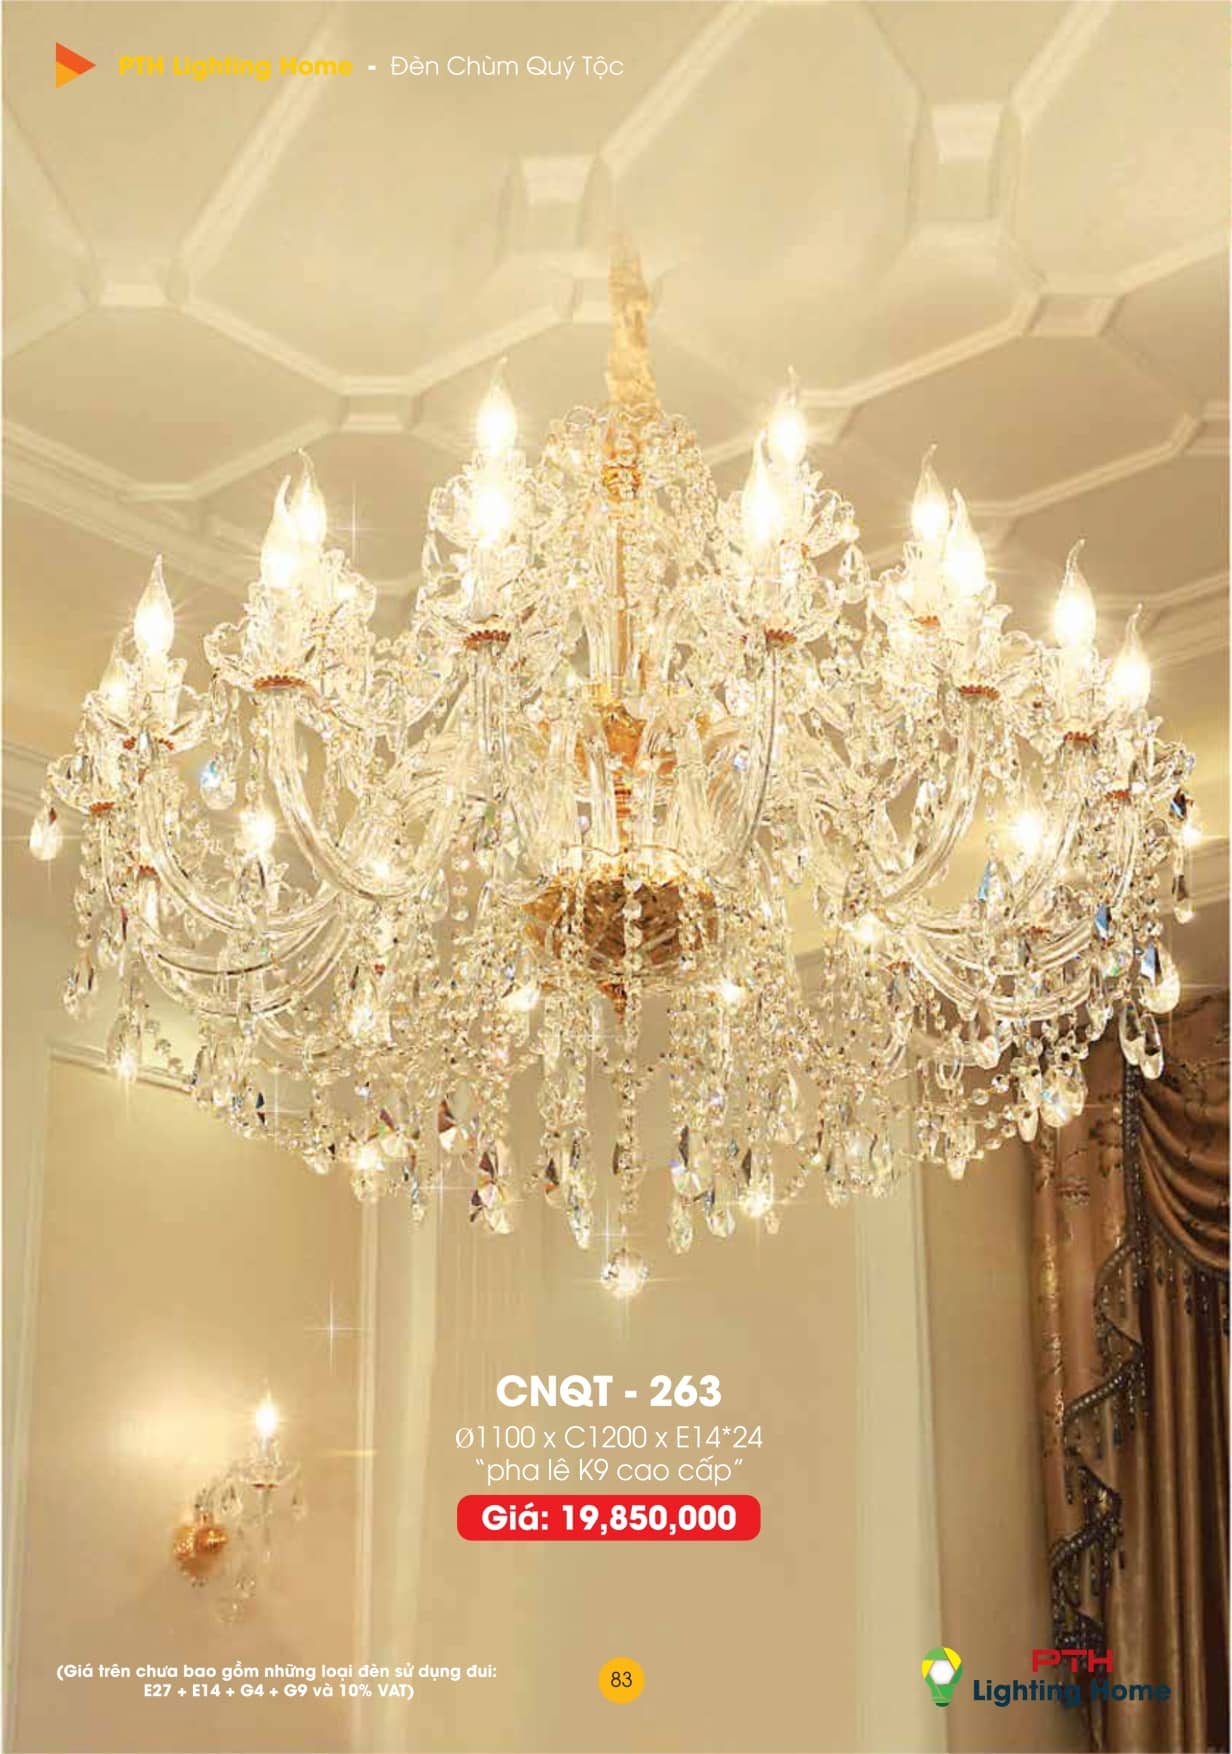 catalogue-bang-gia-den-led-trang-tri-pth-lighting-home-85